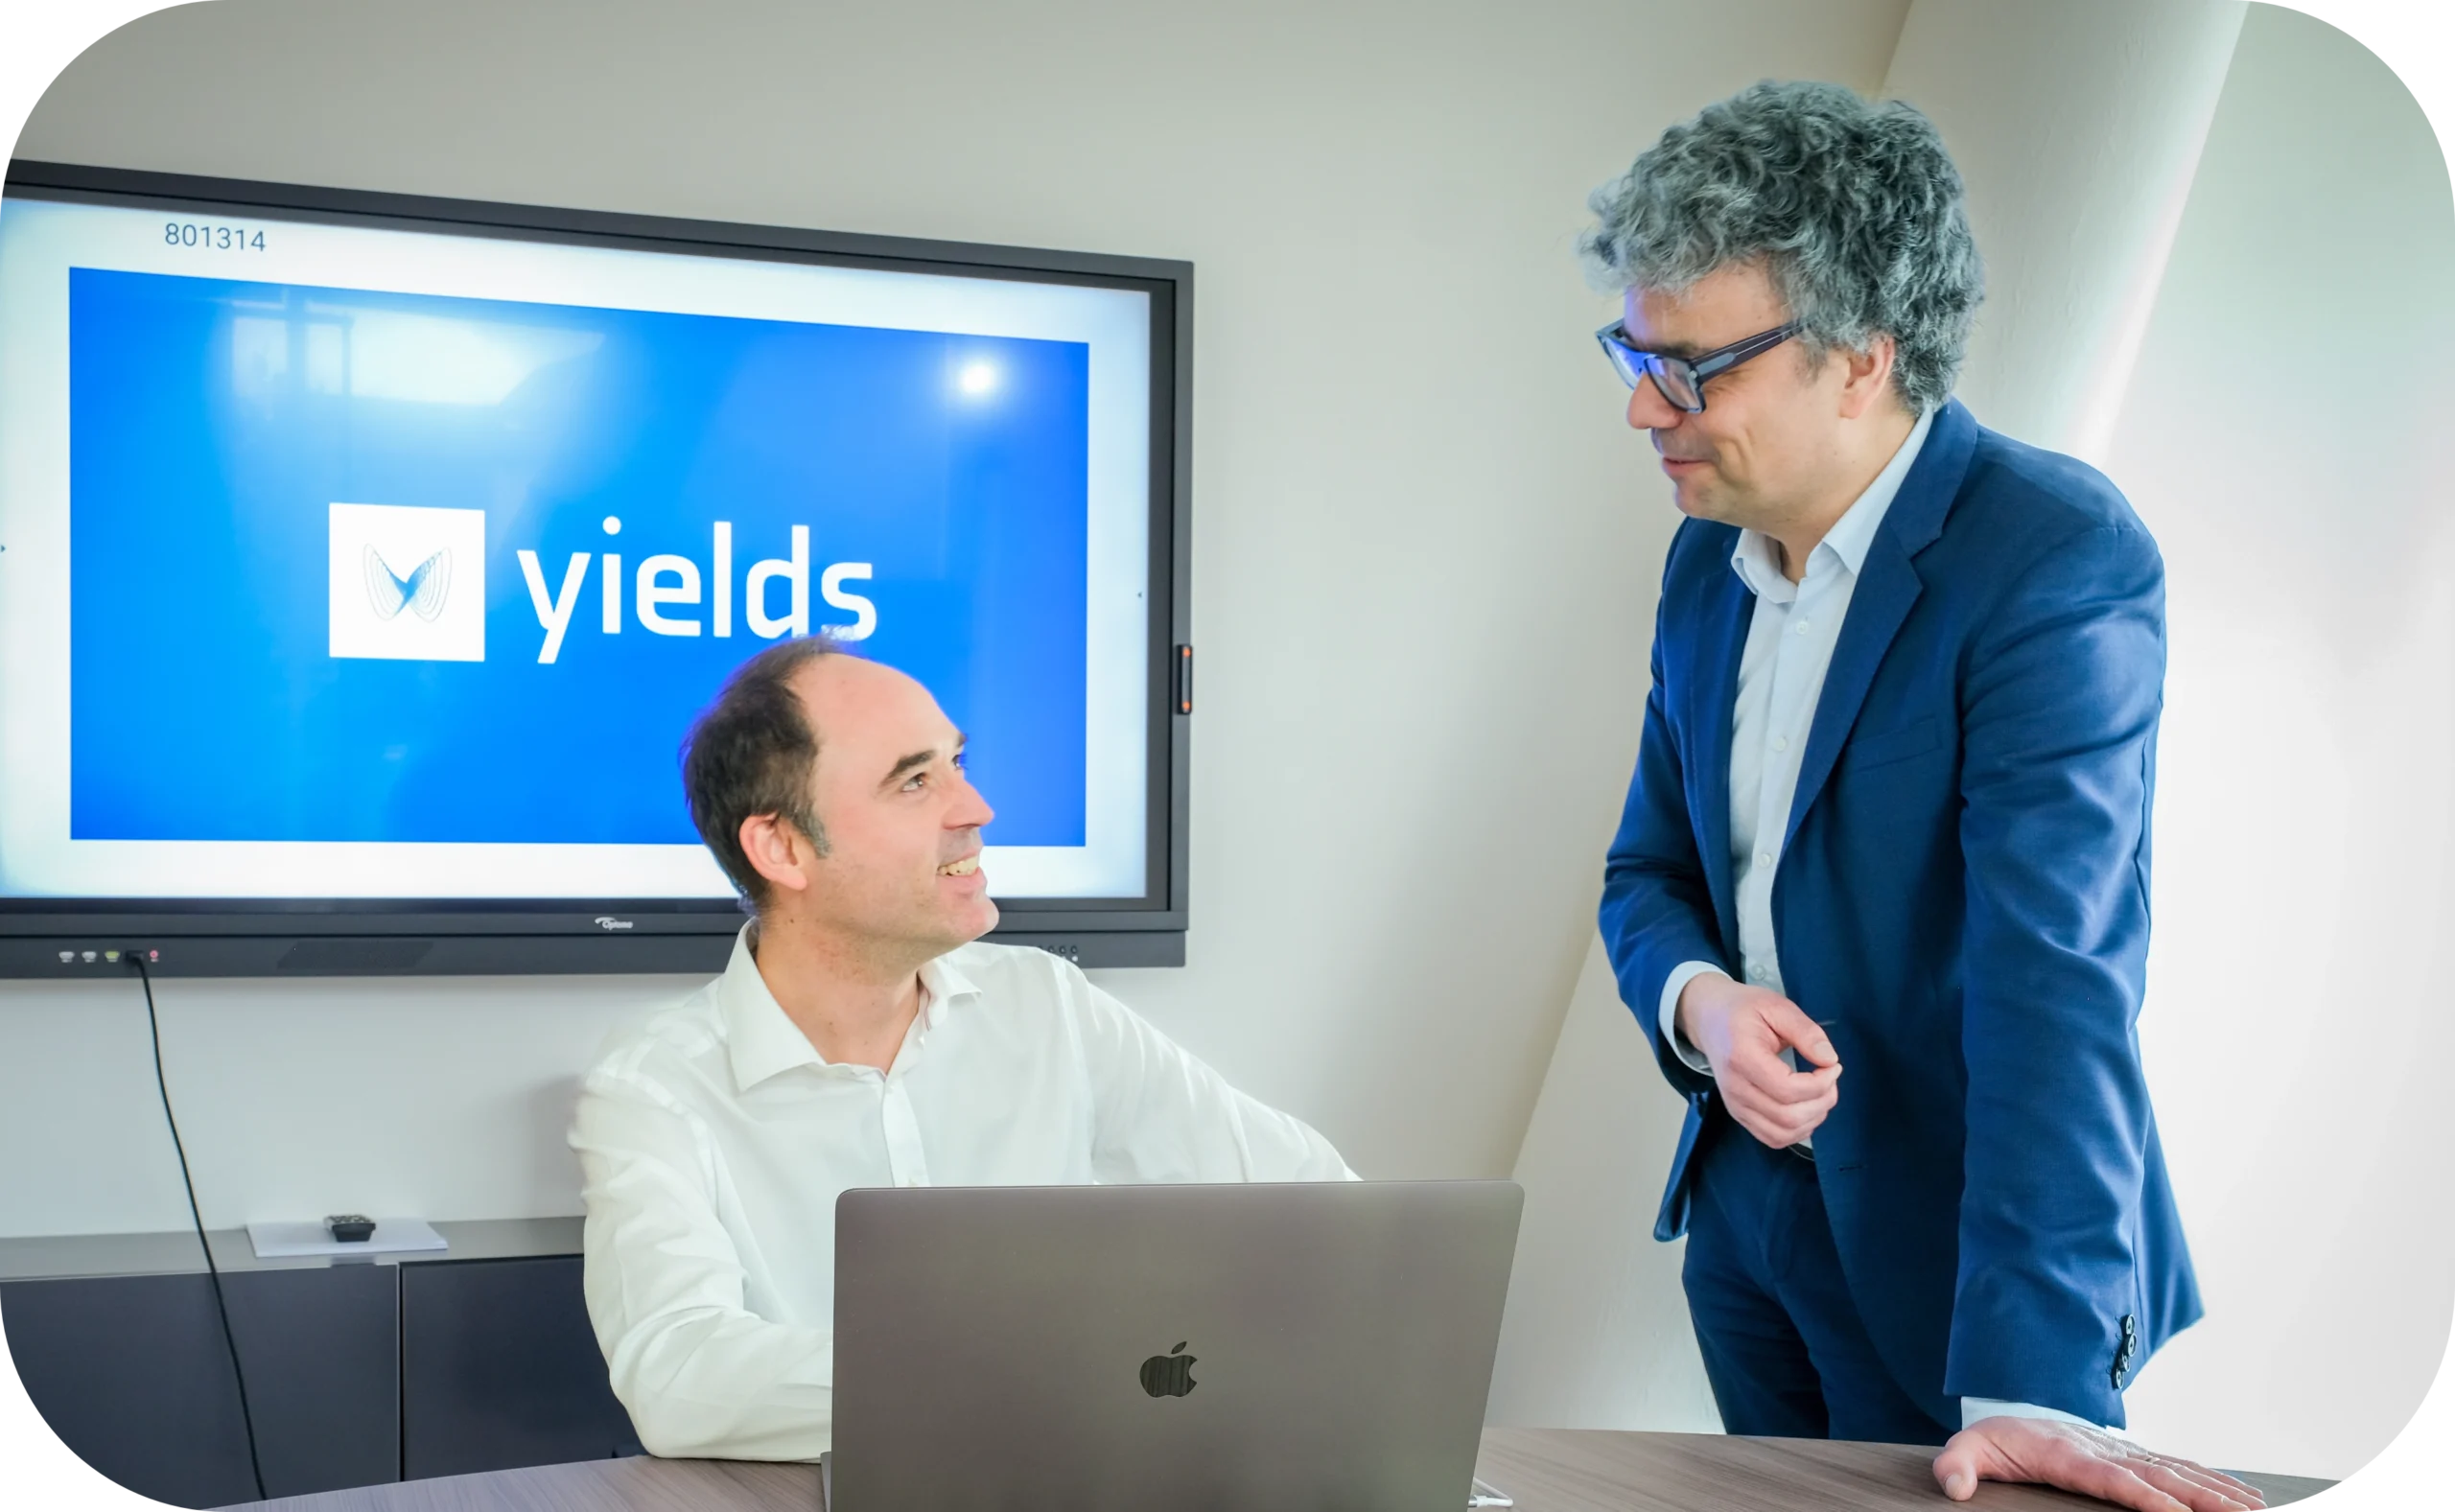 yields founders